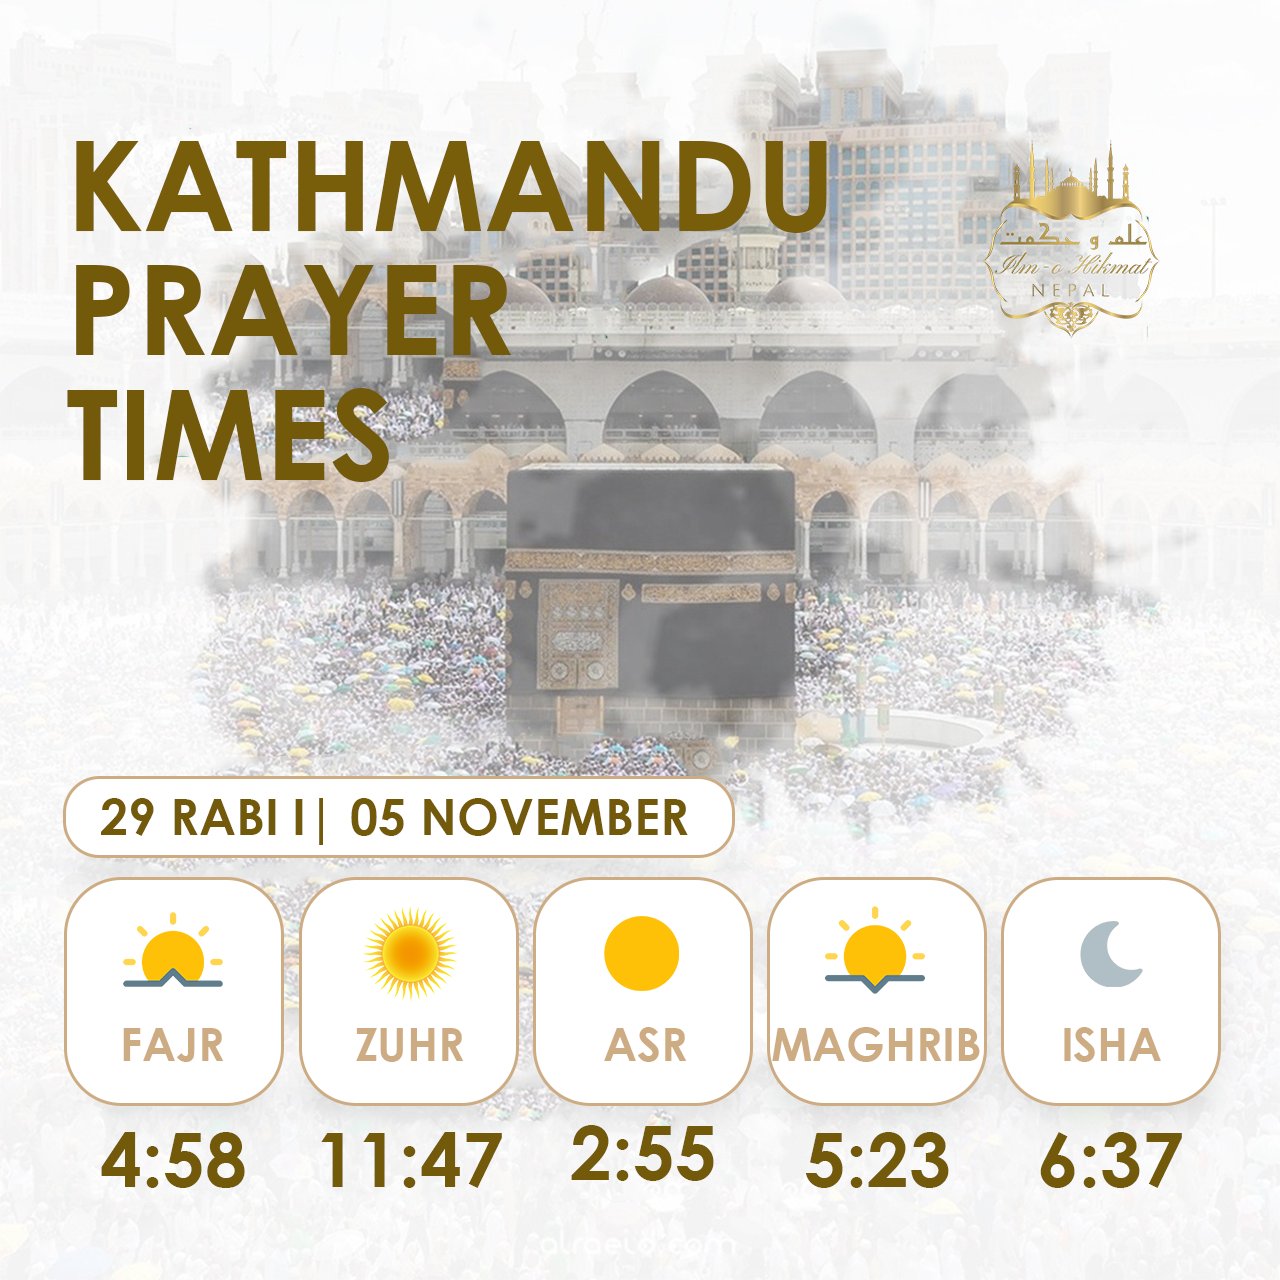 Prayer Times for Kathmandu on Twitter: "It's now ⁦#Zuhr⁩ ⁦#athan⁩ time 11:47 am to ⁦#Kathmandu⁩ city local time. ⁦#Nepal⁩🇳🇵🕋 حان الآن ⁧#أذان⁩ ⁧#الظهر⁩ 11:47 ص حسب التوقيت المحلي لمدينة ⁧#كاتماندو⁩ ⁧#